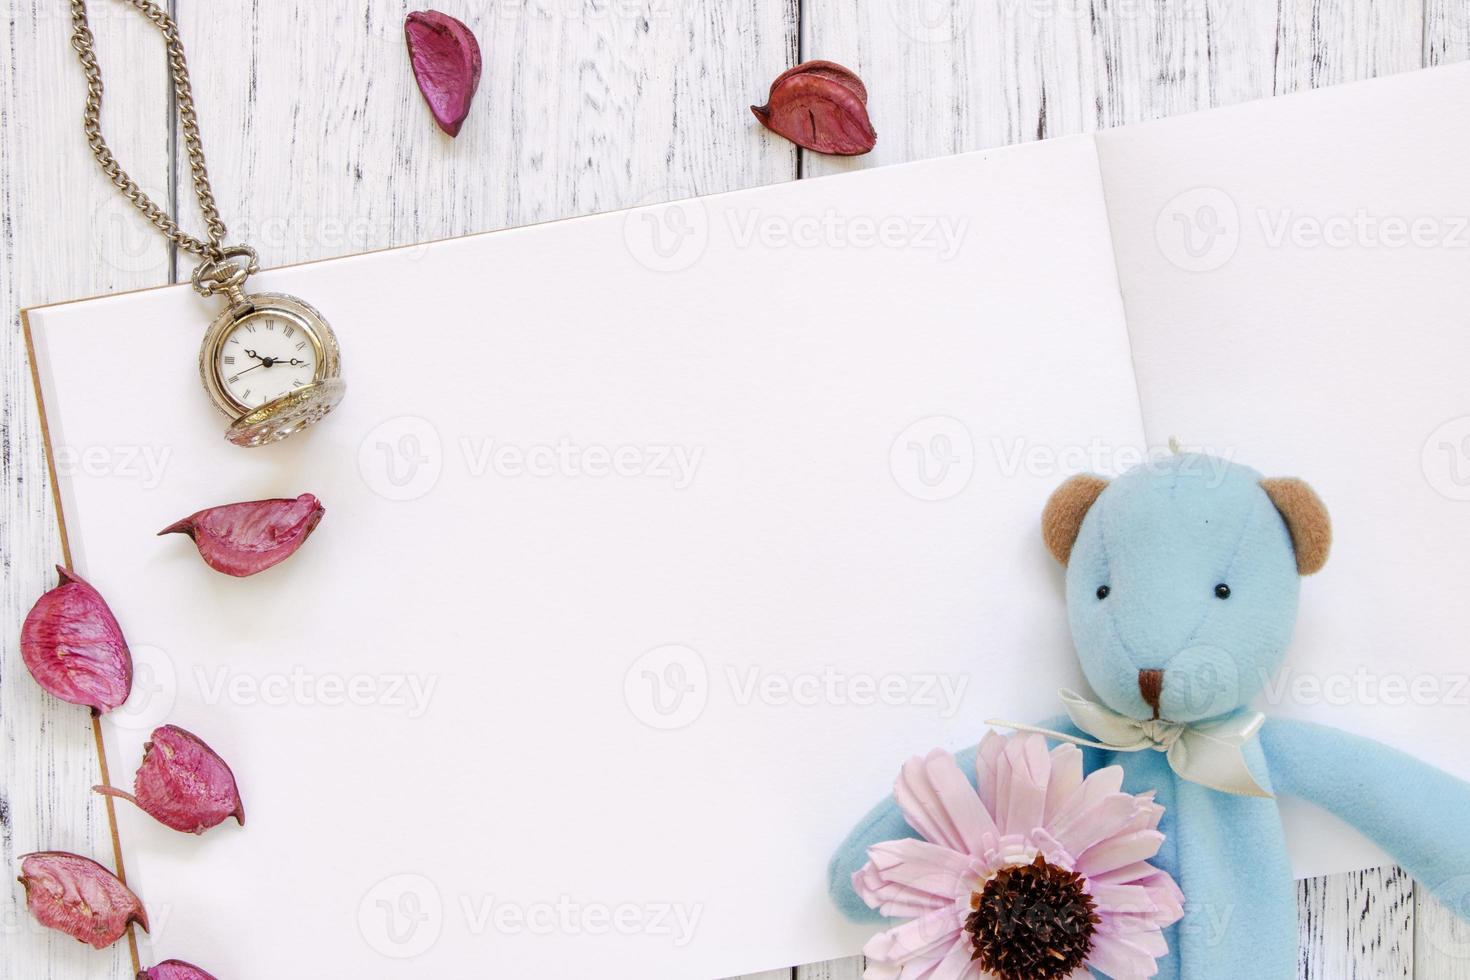 white painted wood table purple flower petals bear doll pocket clock photo